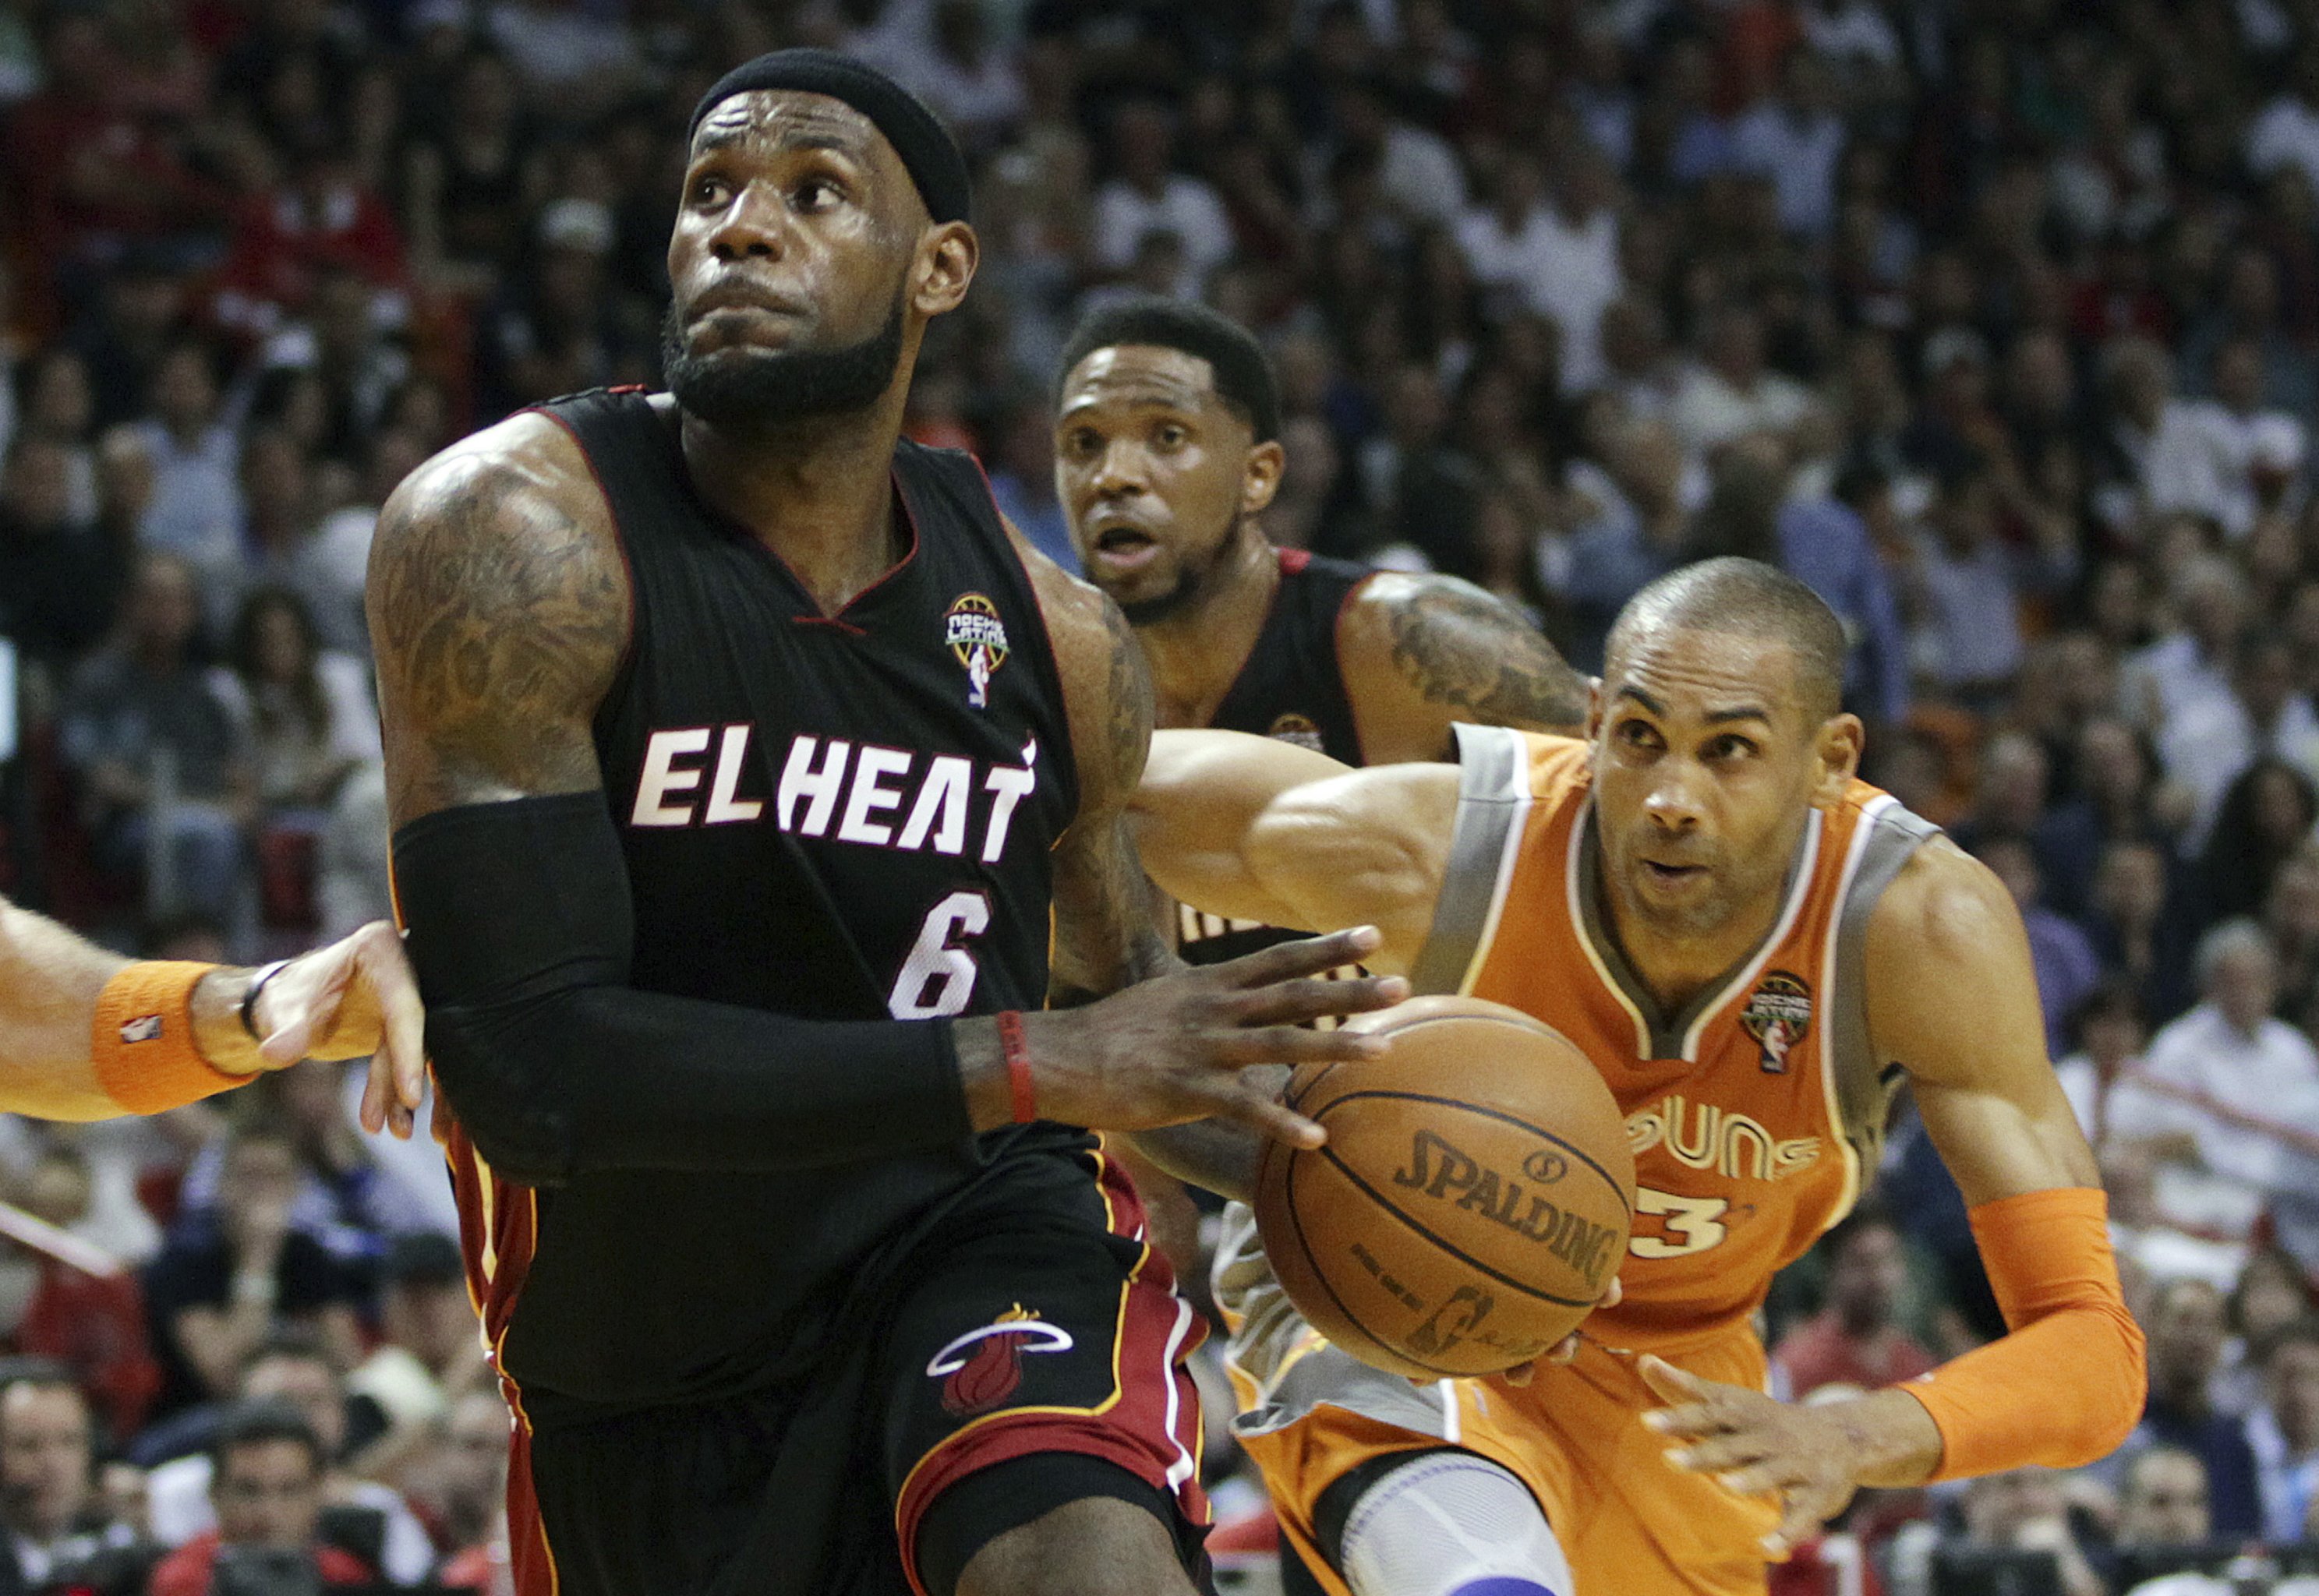 Jordan Clarkson explains differences between Kobe Bryant's, LeBron James'  leadership